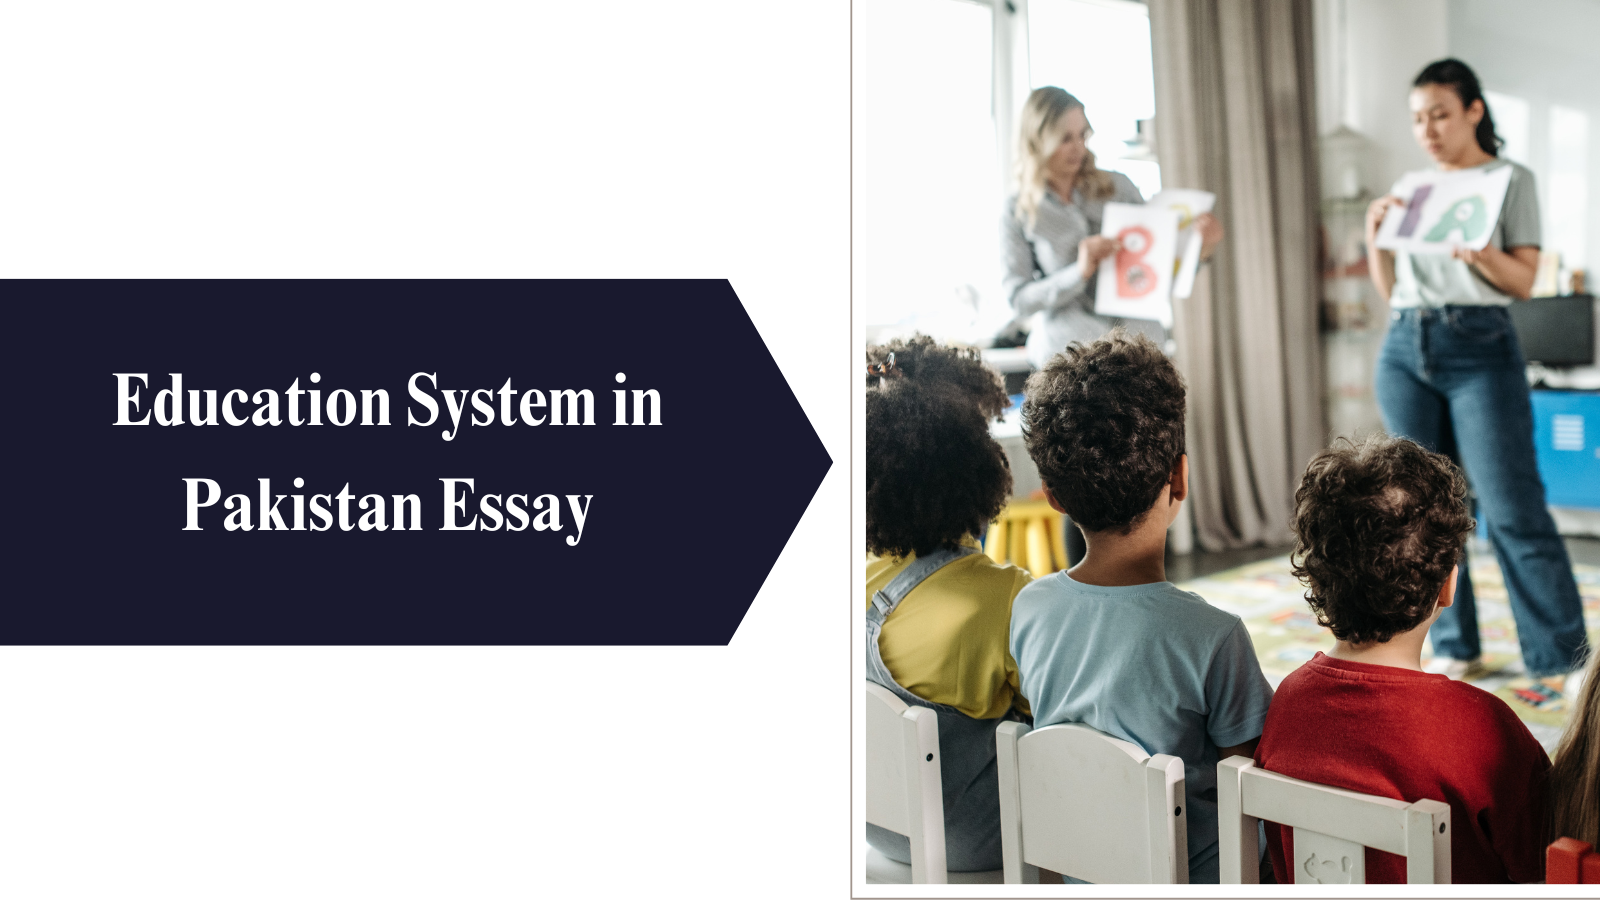 Education System in Pakistan Essay